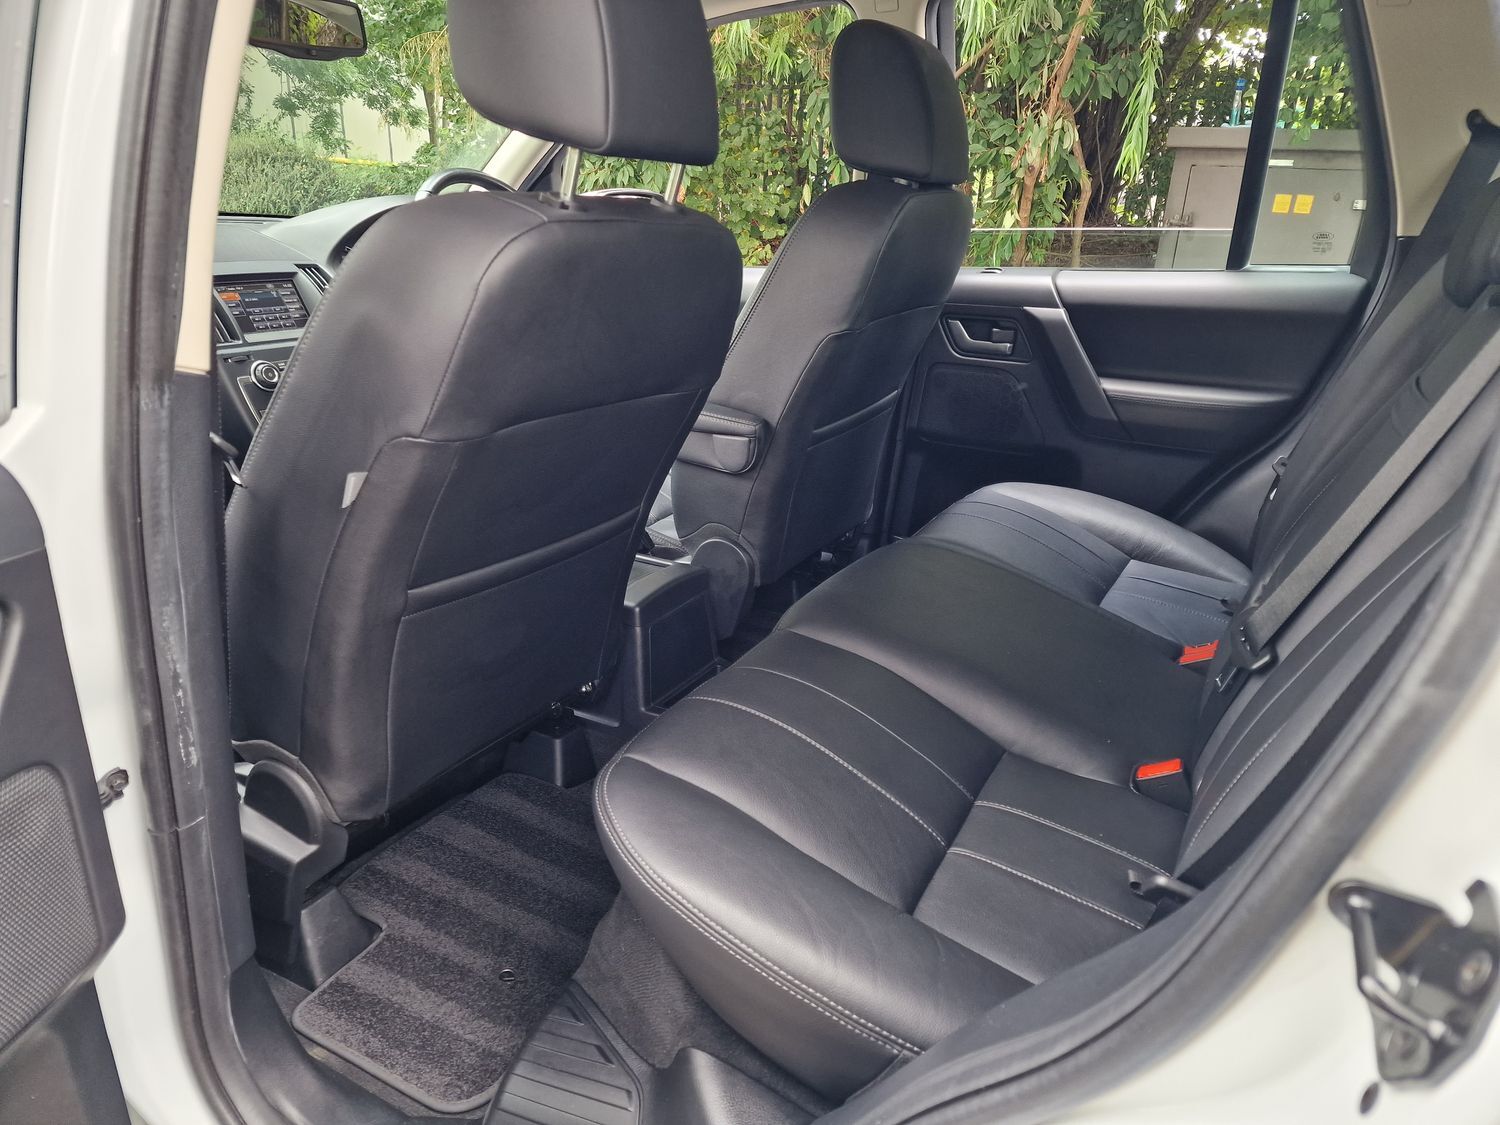 Land Rover Freelander interior - Seats